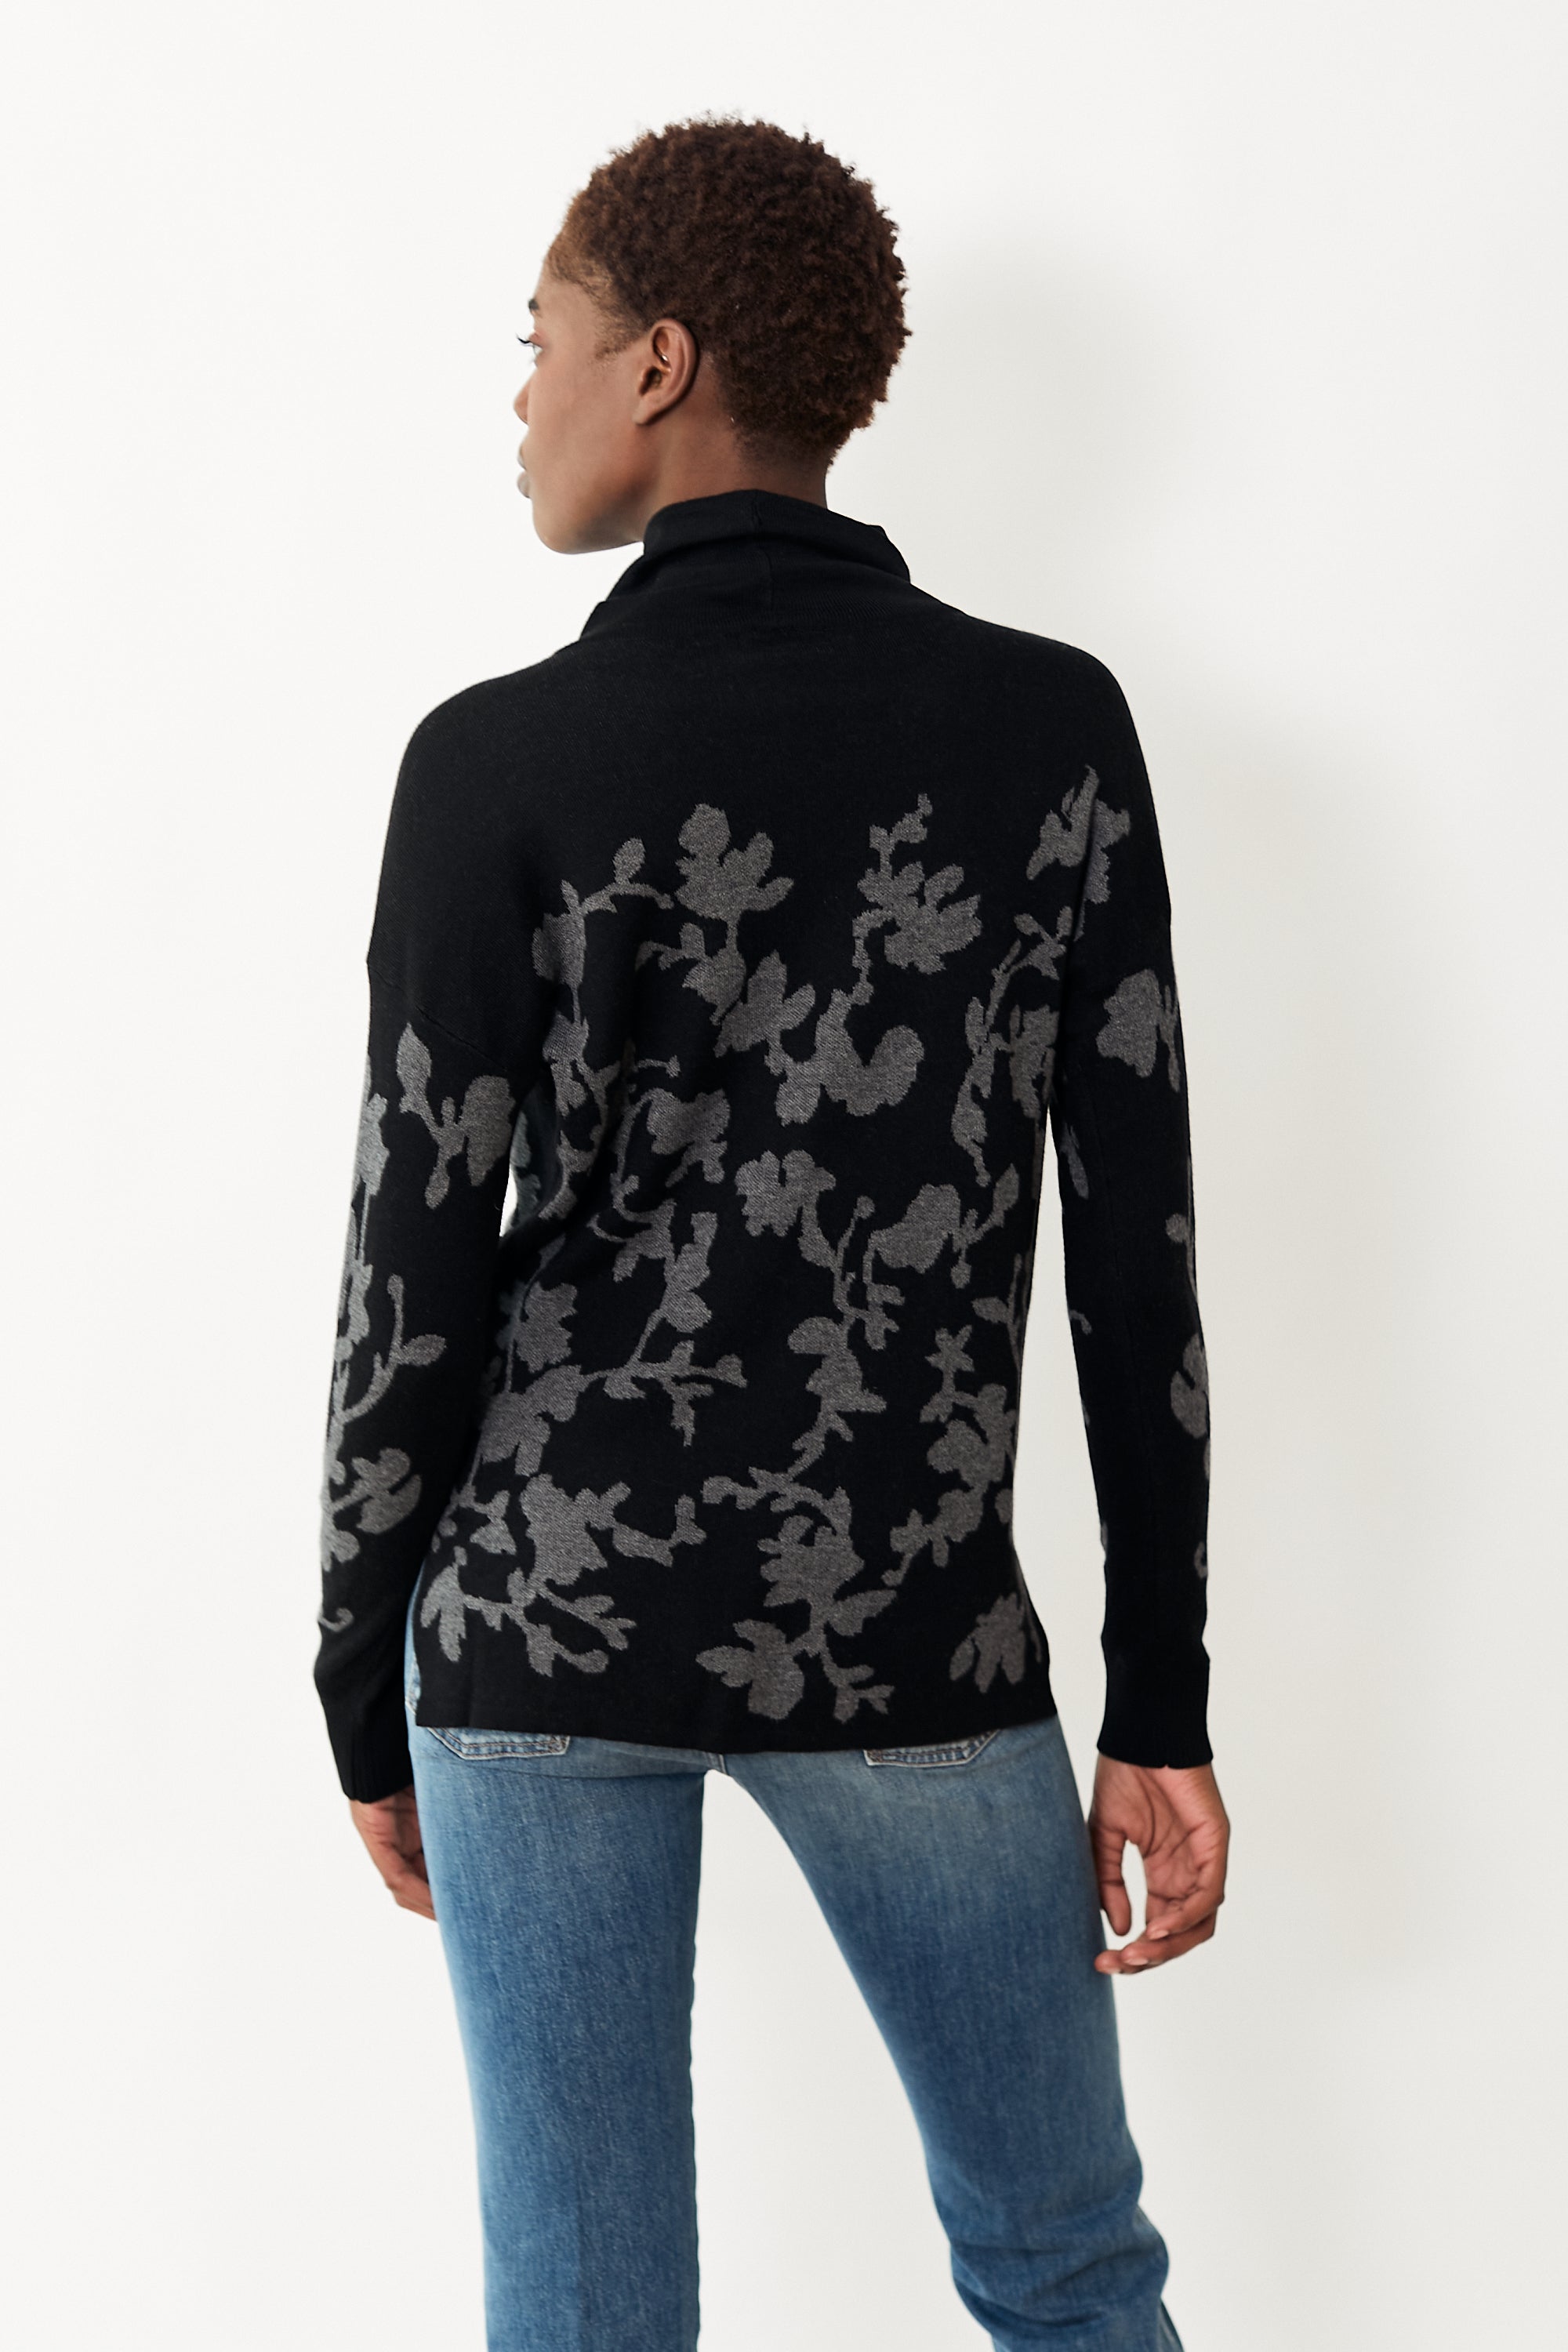 Lilla P Floral Turtleneck Tunic Sweater